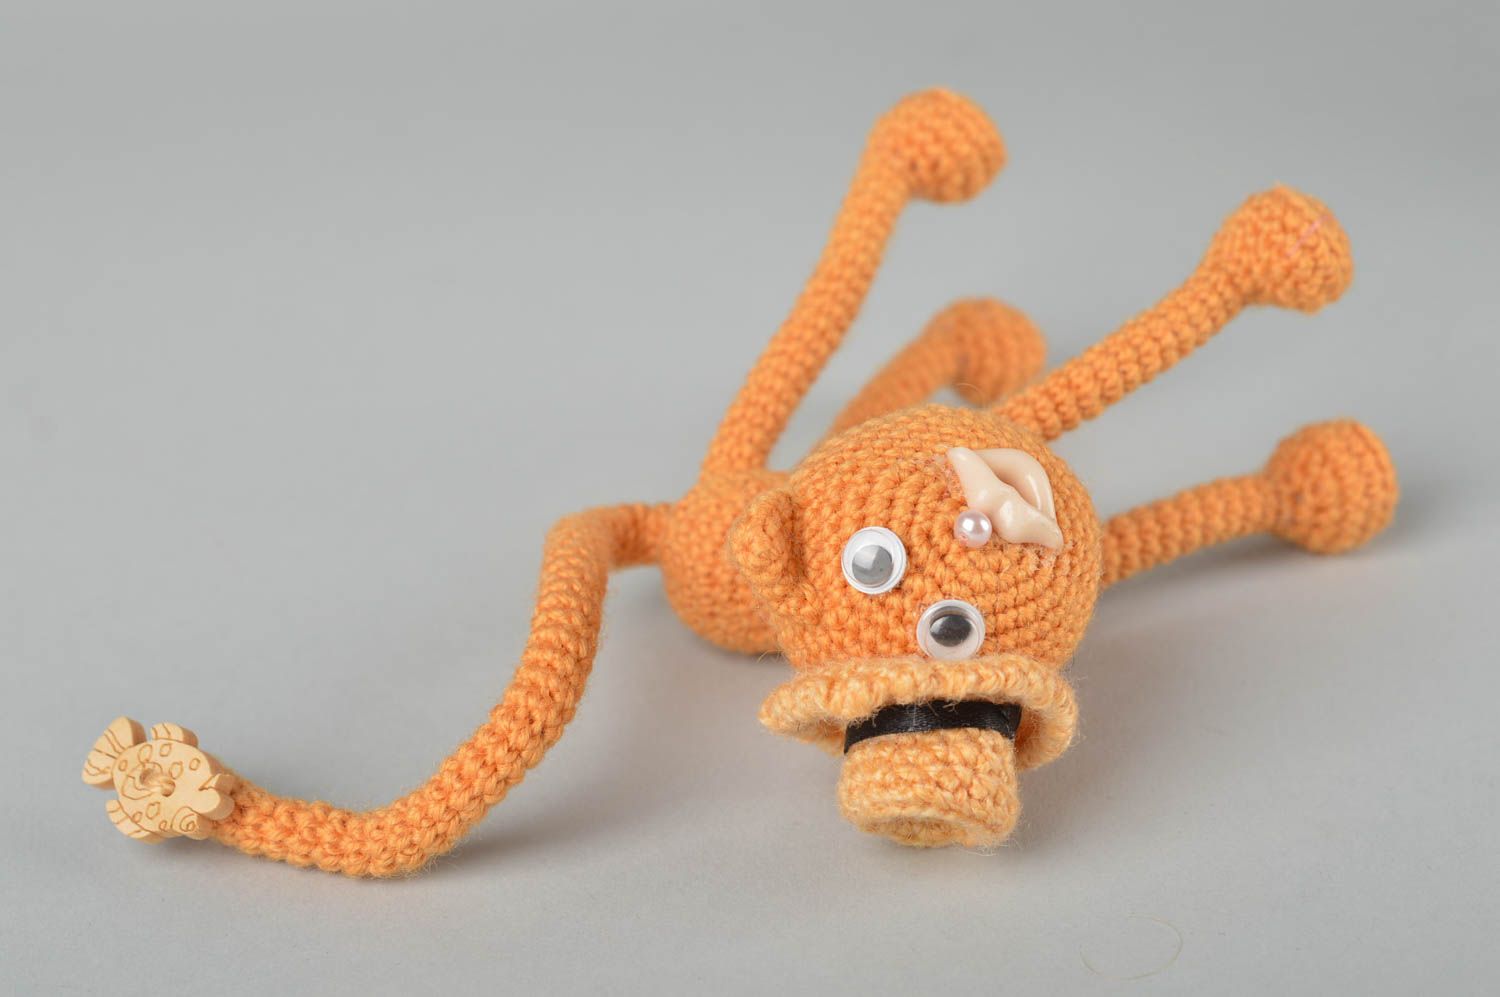 Hand-crocheted creative toy handmade crocheted toy for babies nursery decor photo 3